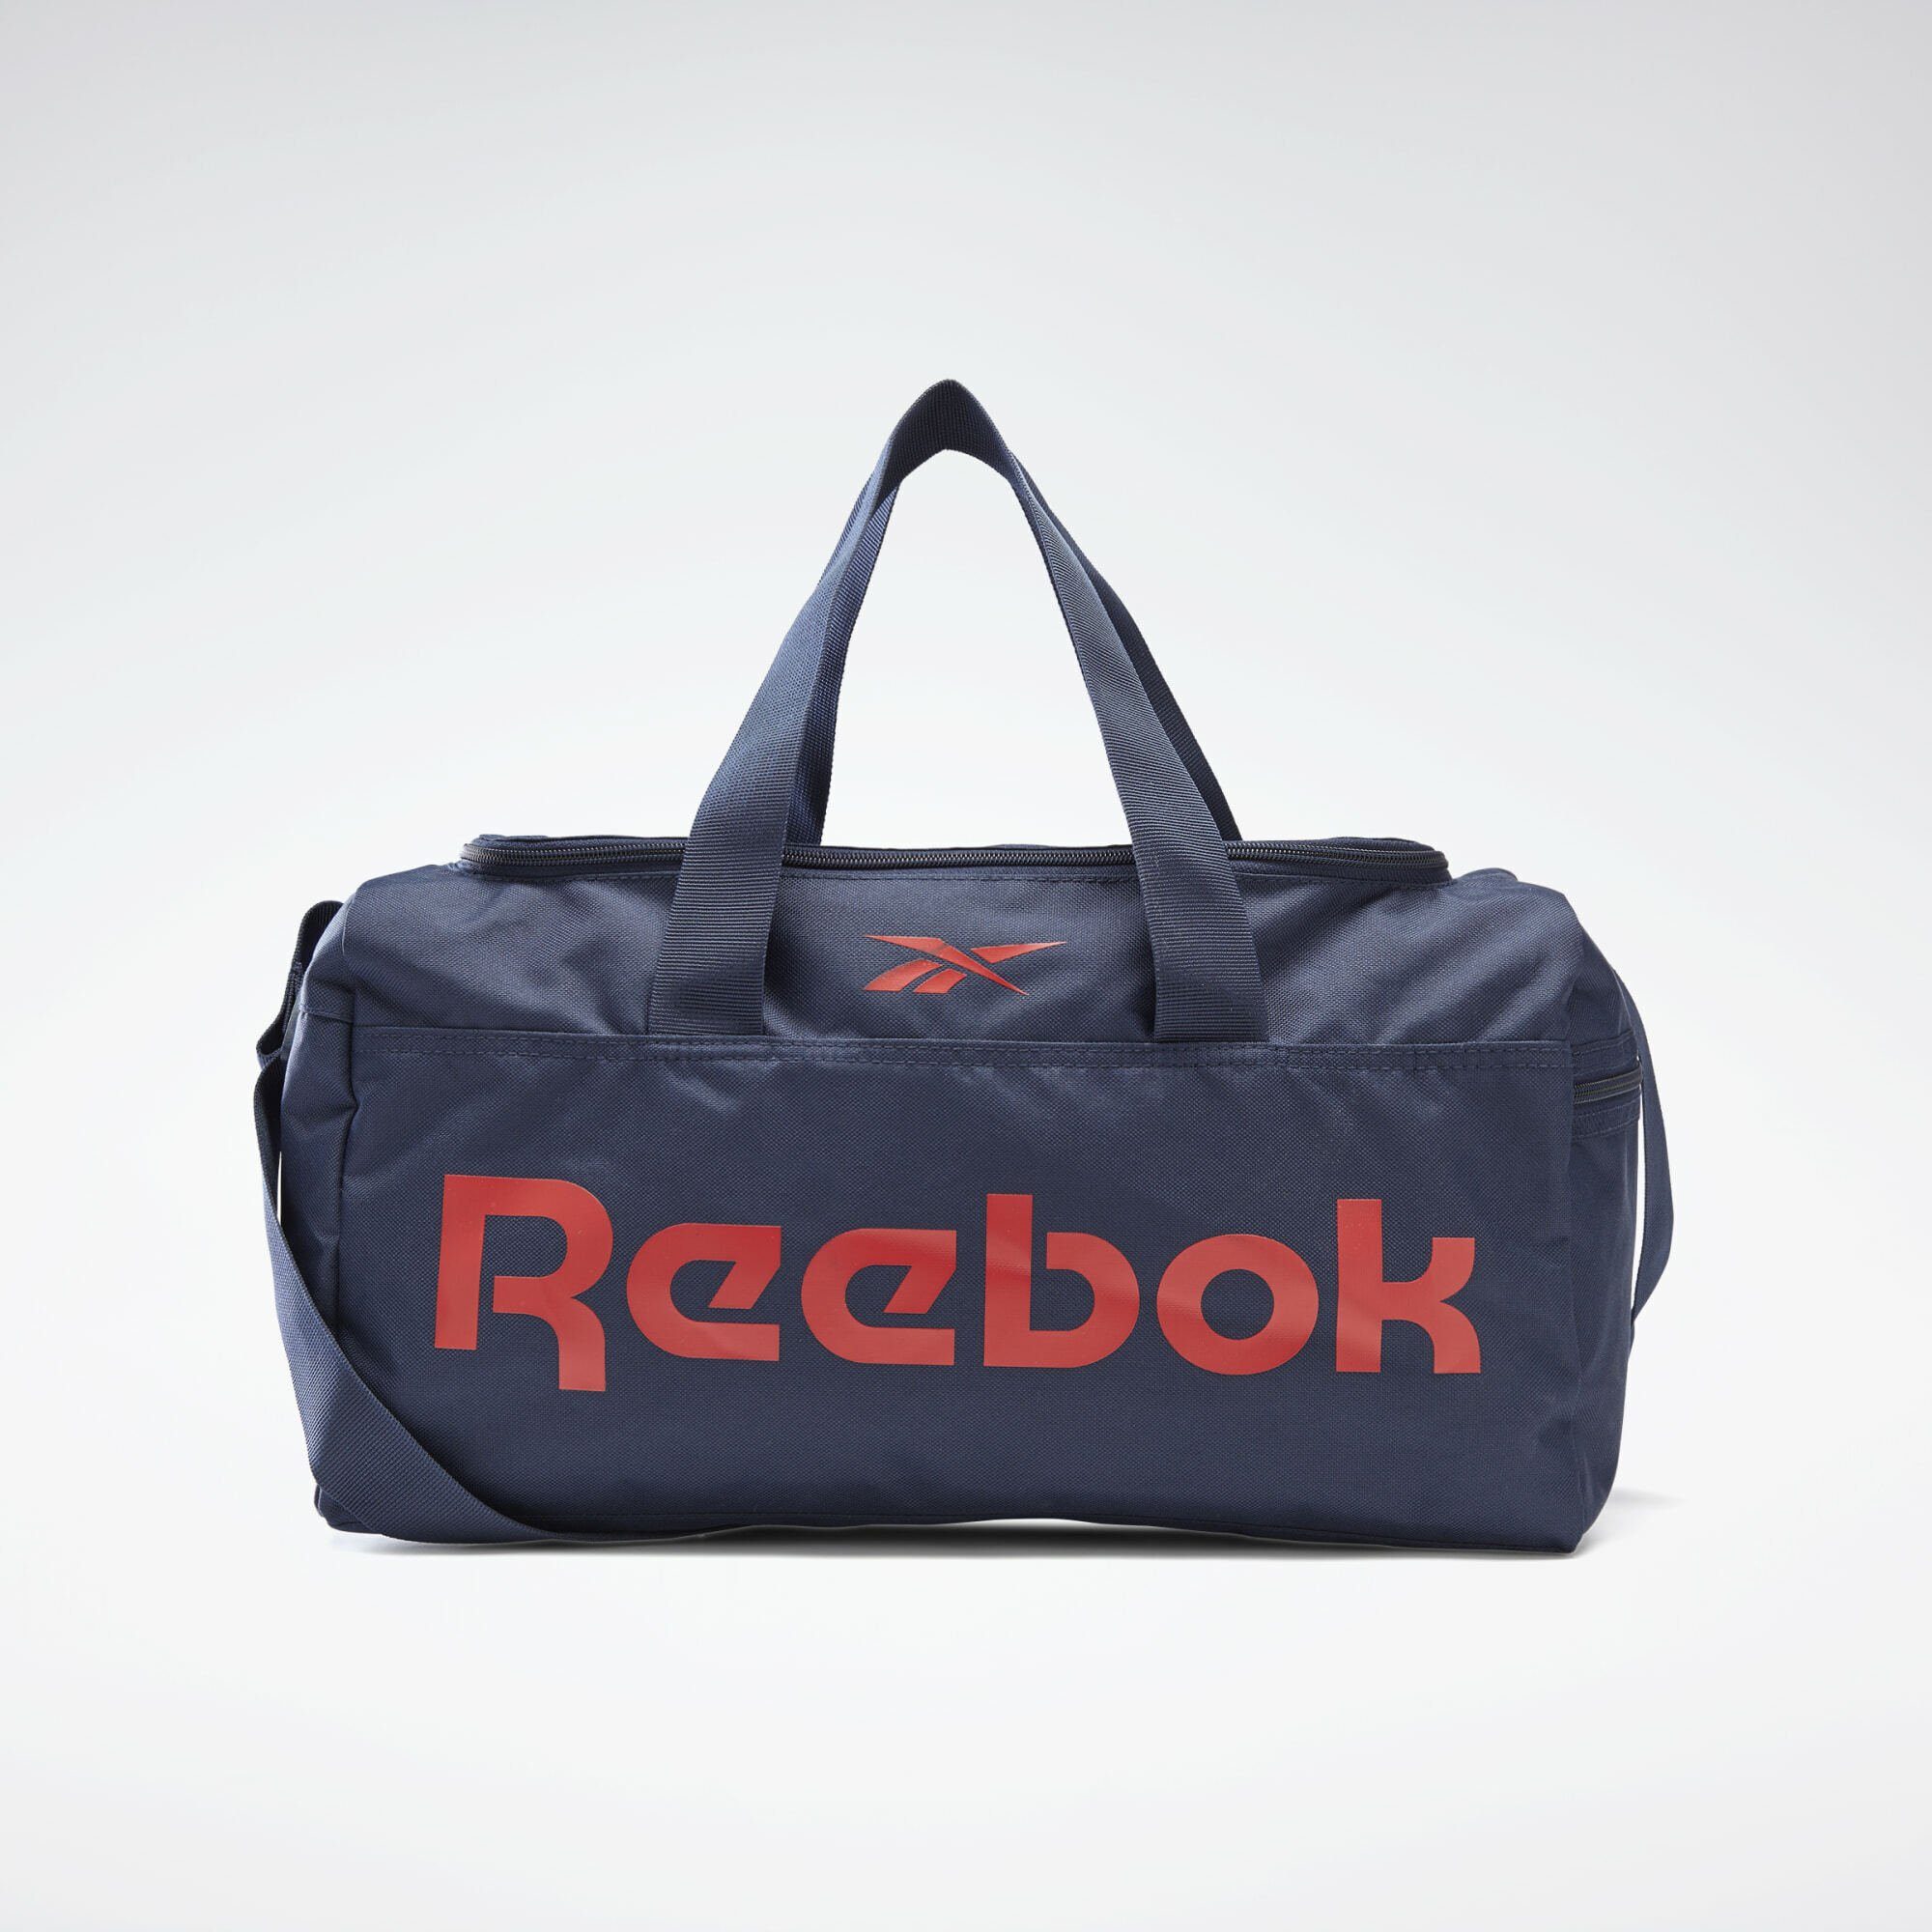 Reebok Sporttasche »Active Core Grip Duffel Bag Small« online kaufen | OTTO